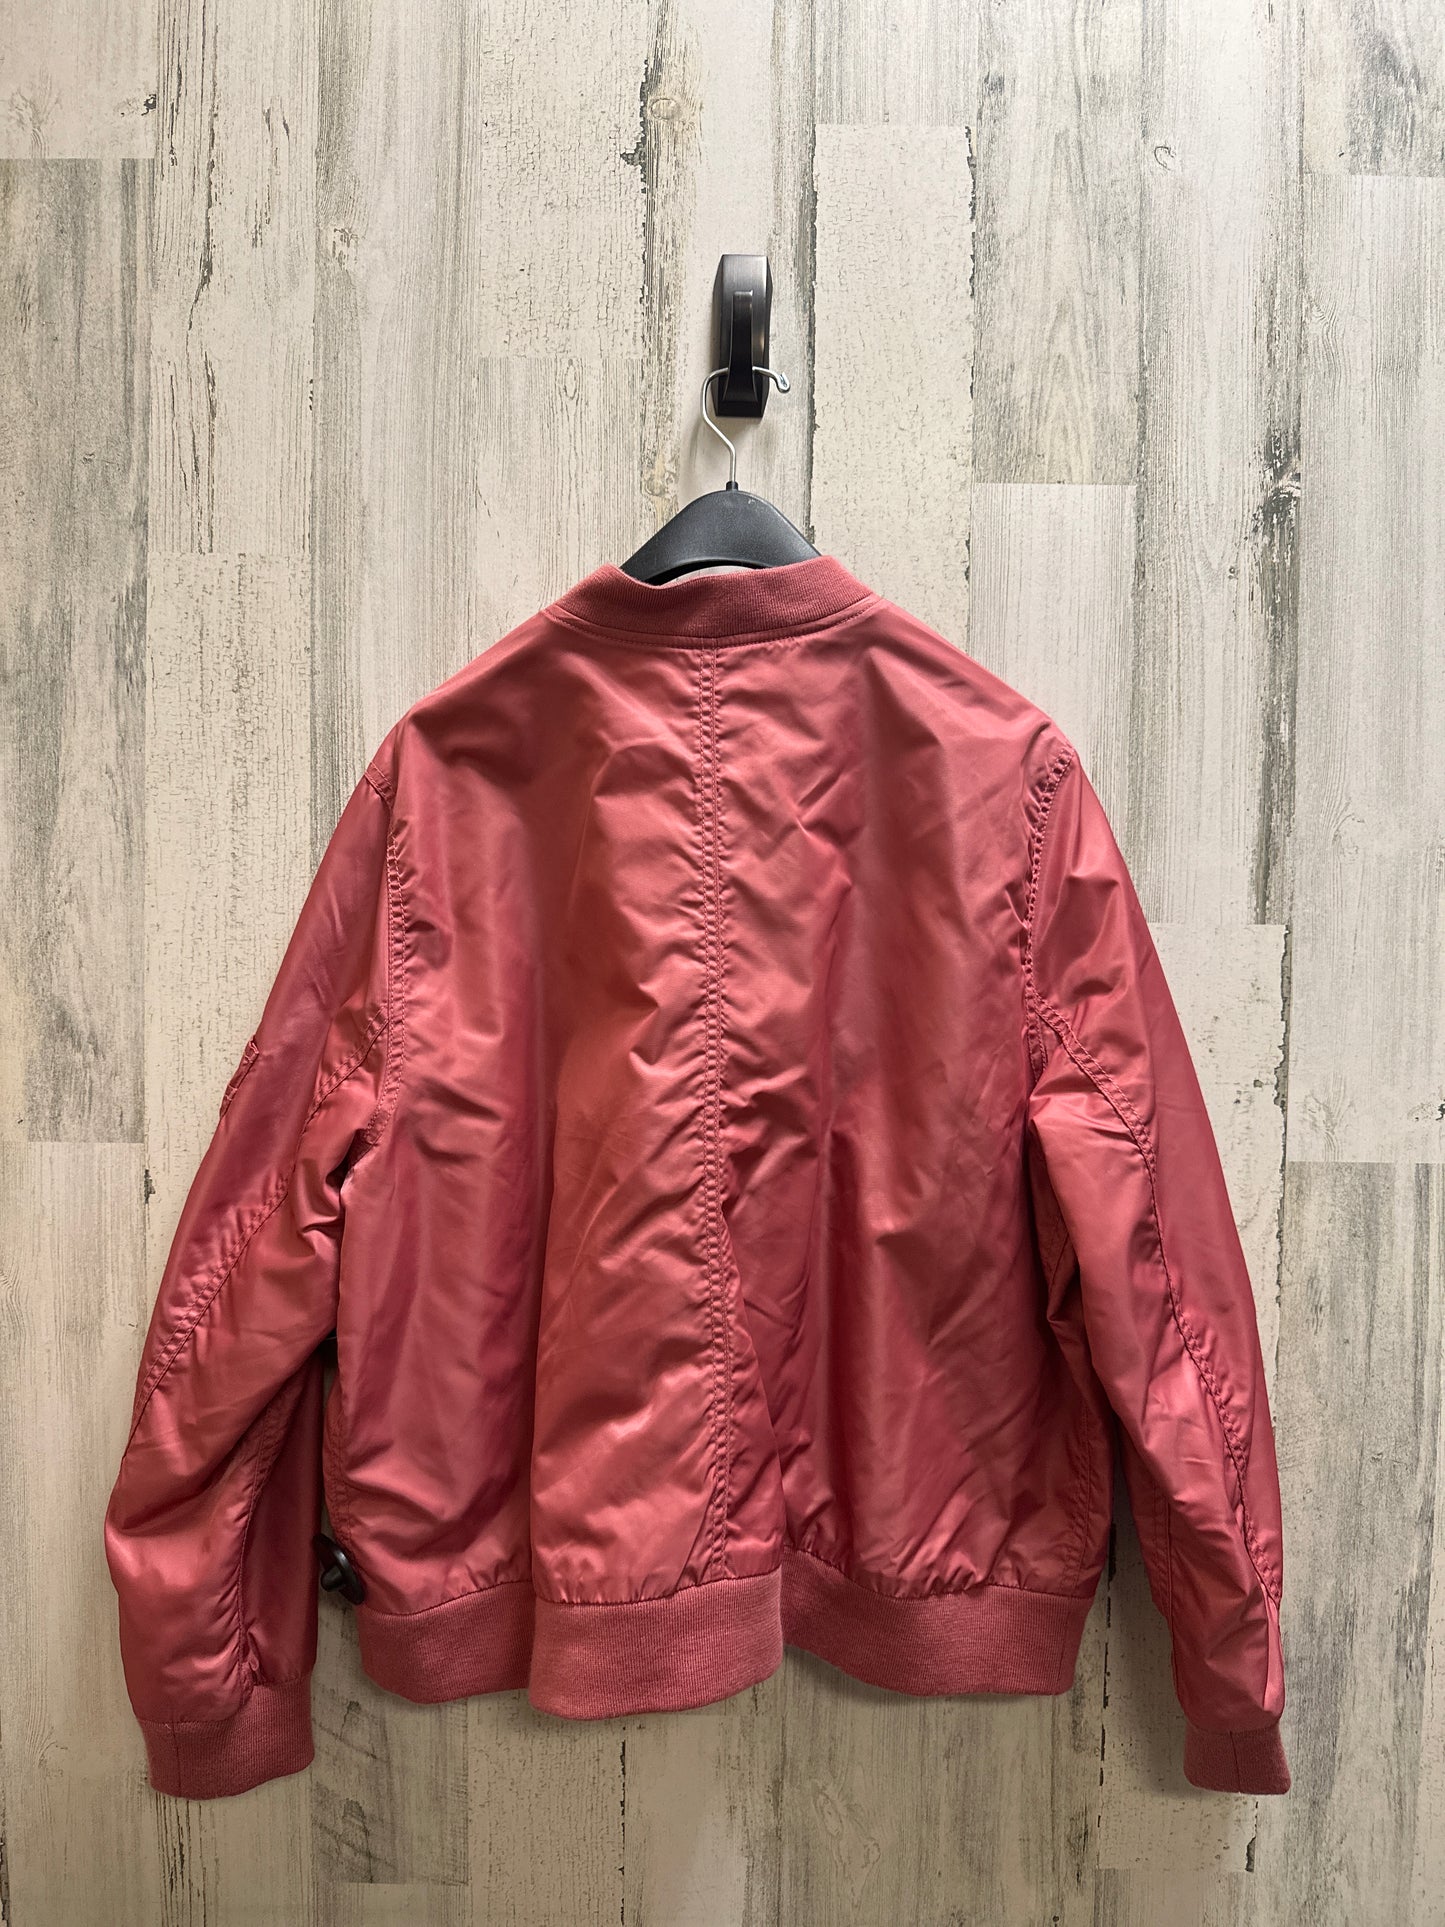 Jacket Fleece By Gap  Size: Xxl